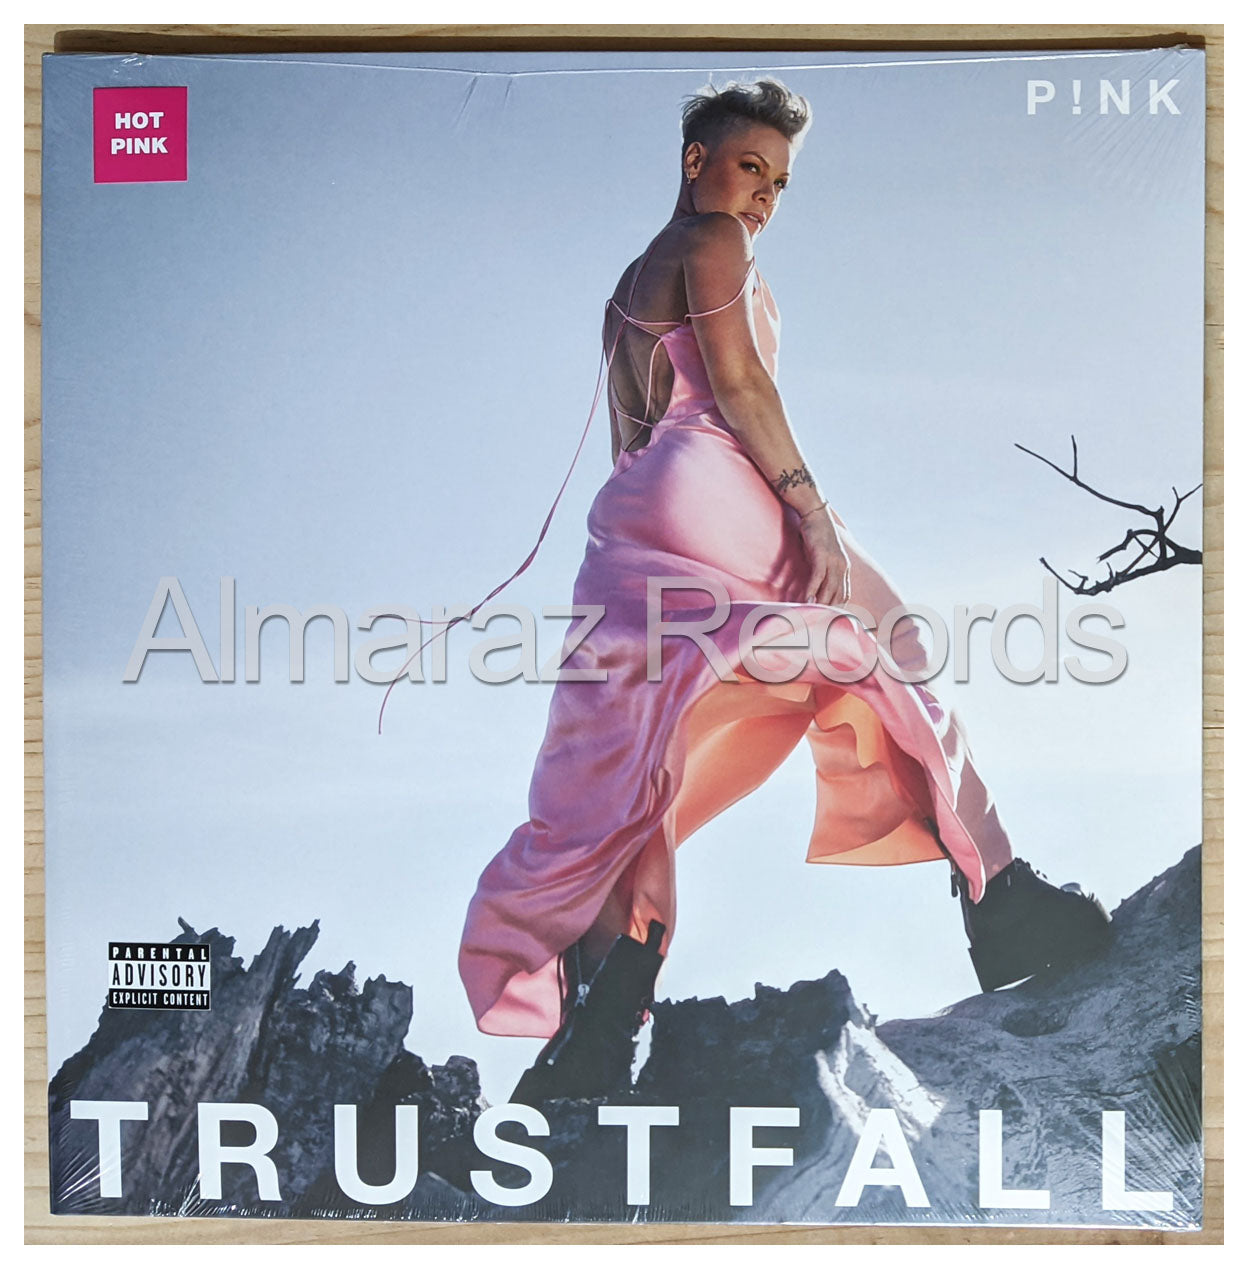 P!nk Trustfall Limited Pink Vinyl LP